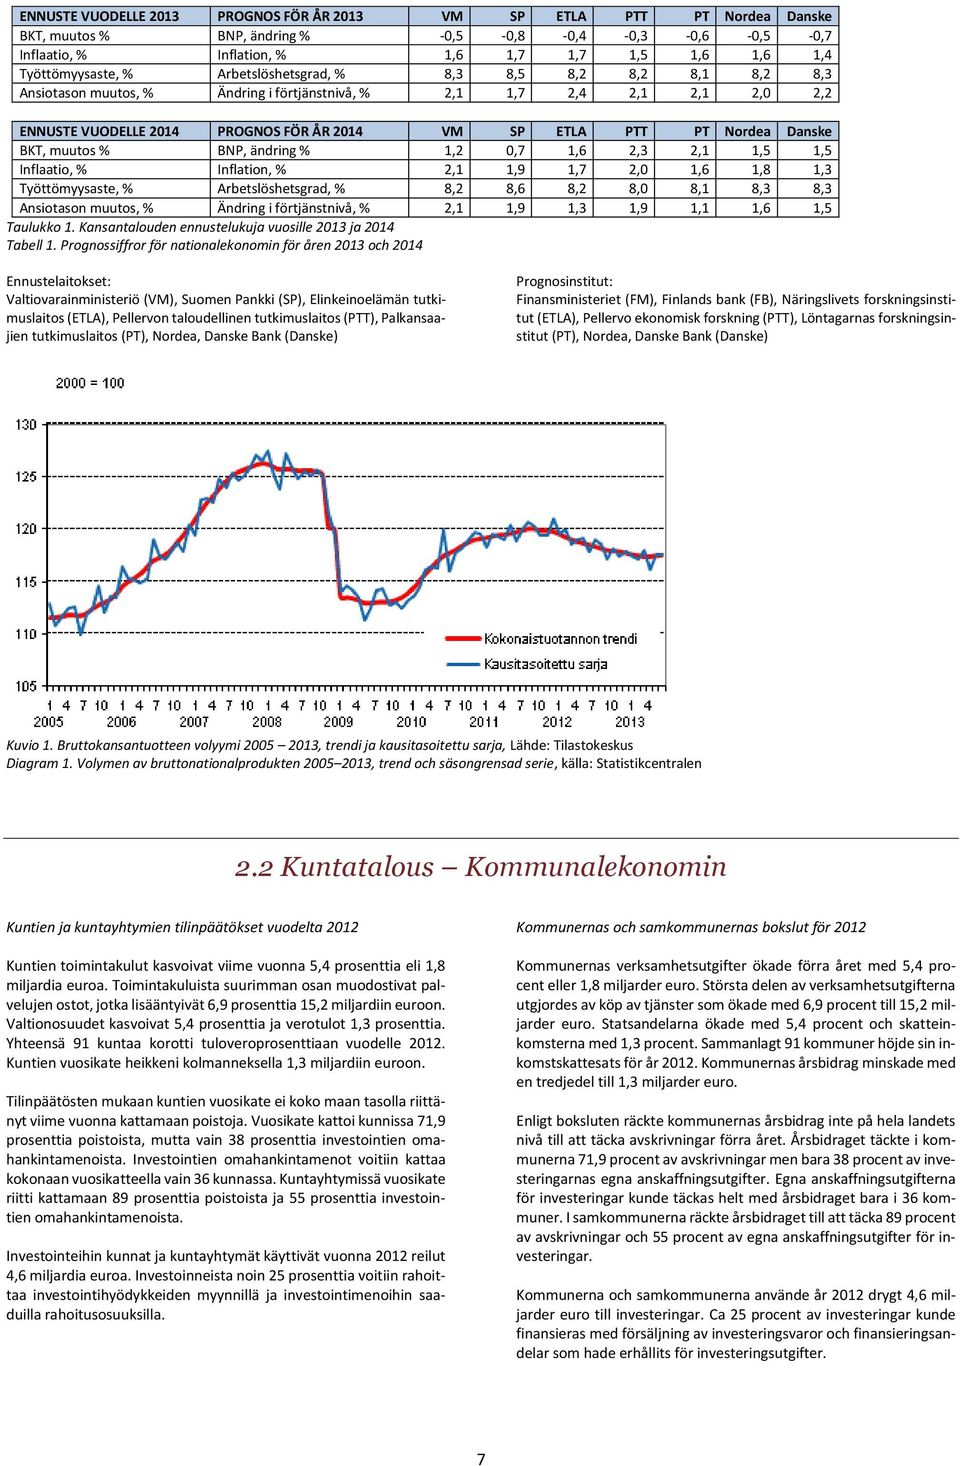 PT Nordea Danske BKT, muutos % BNP, ändring % 1,2 0,7 1,6 2,3 2,1 1,5 1,5 Inflaatio, % Inflation, % 2,1 1,9 1,7 2,0 1,6 1,8 1,3 Työttömyysaste, % Arbetslöshetsgrad, % 8,2 8,6 8,2 8,0 8,1 8,3 8,3